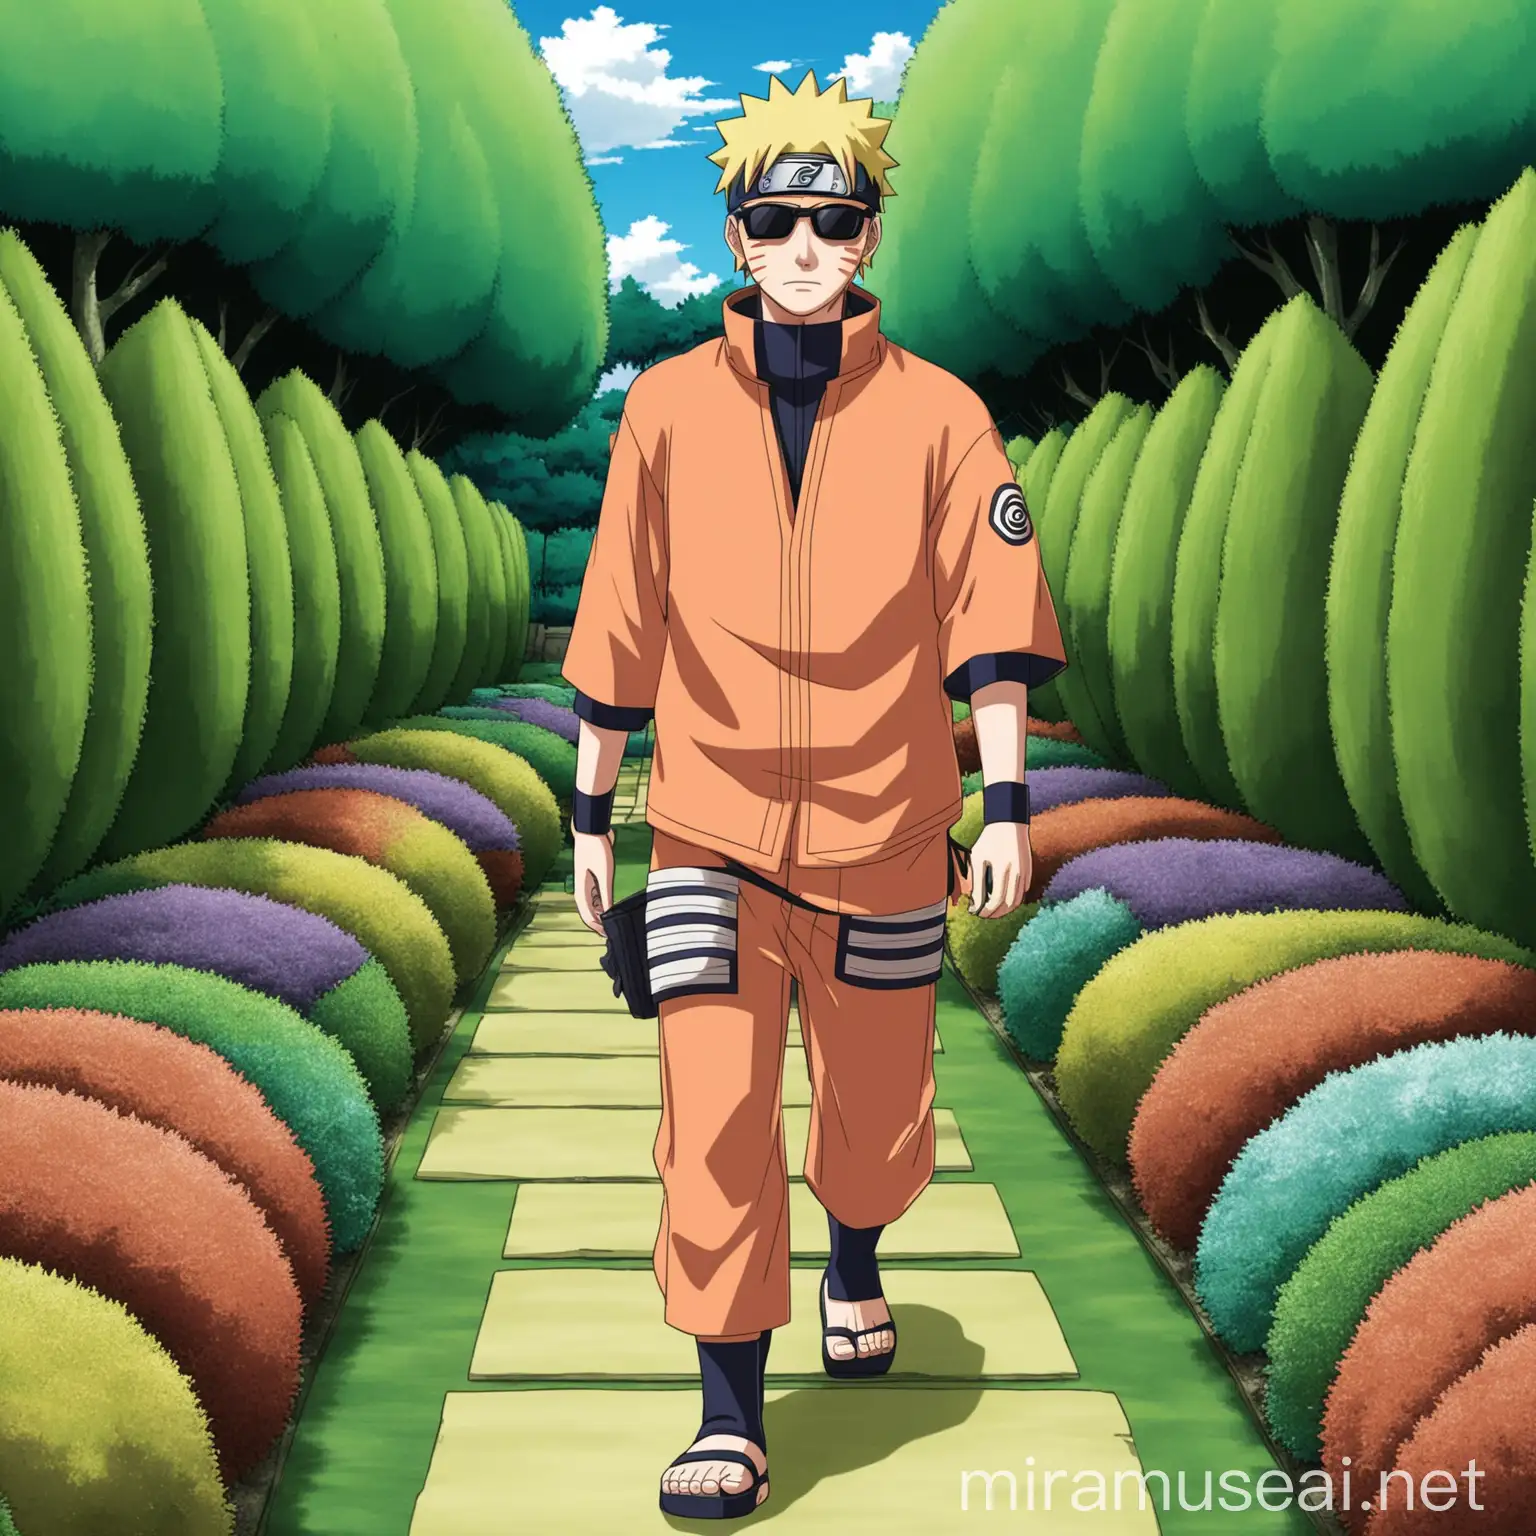 naruto wearing sunglasses and walking through the garden